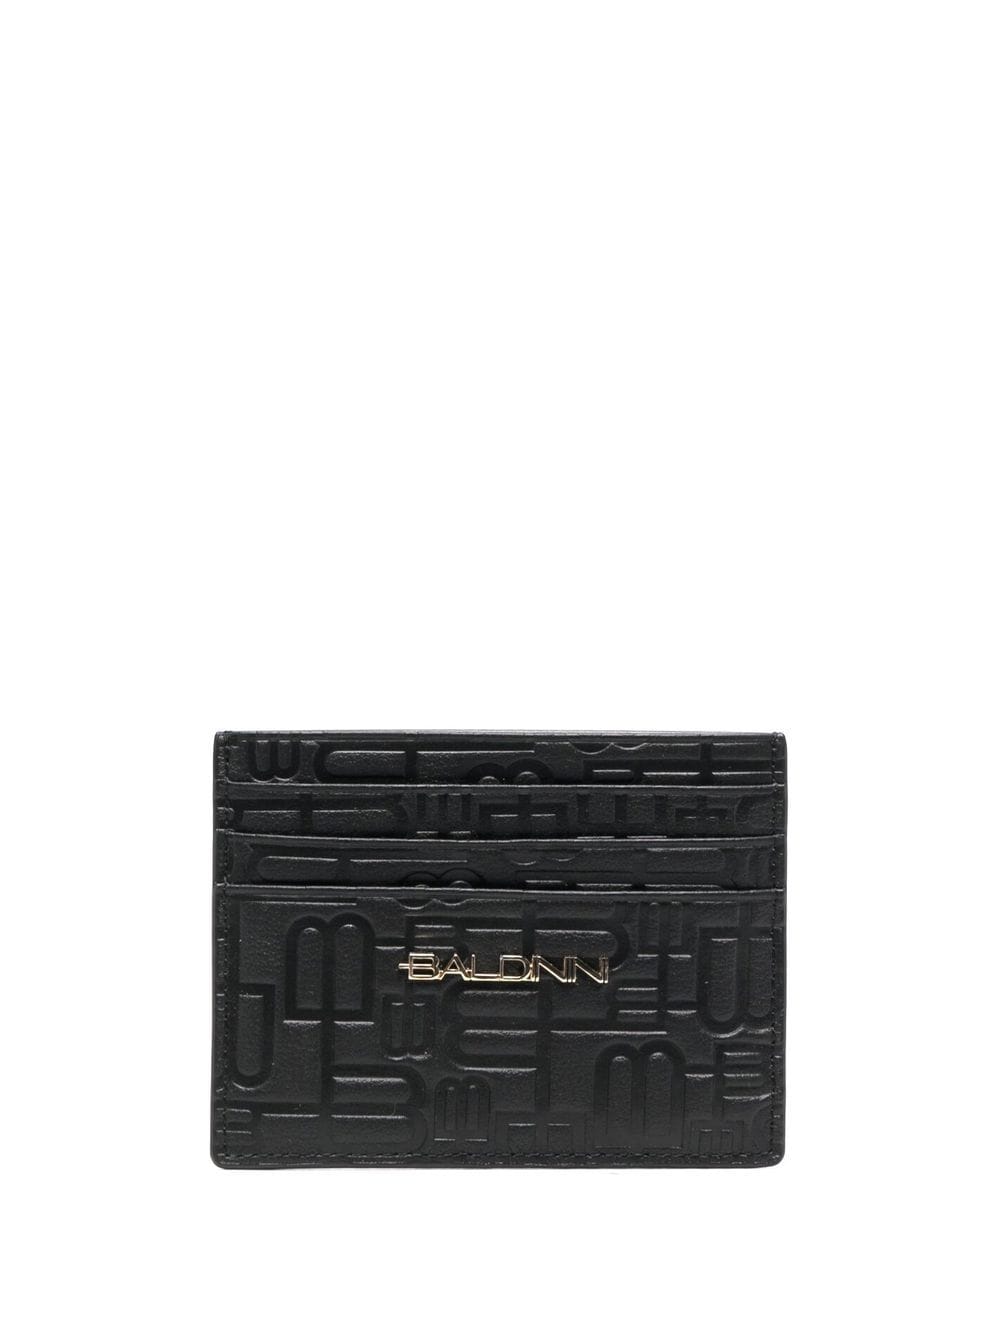 Baldinini monogram leather cardholder - Black von Baldinini